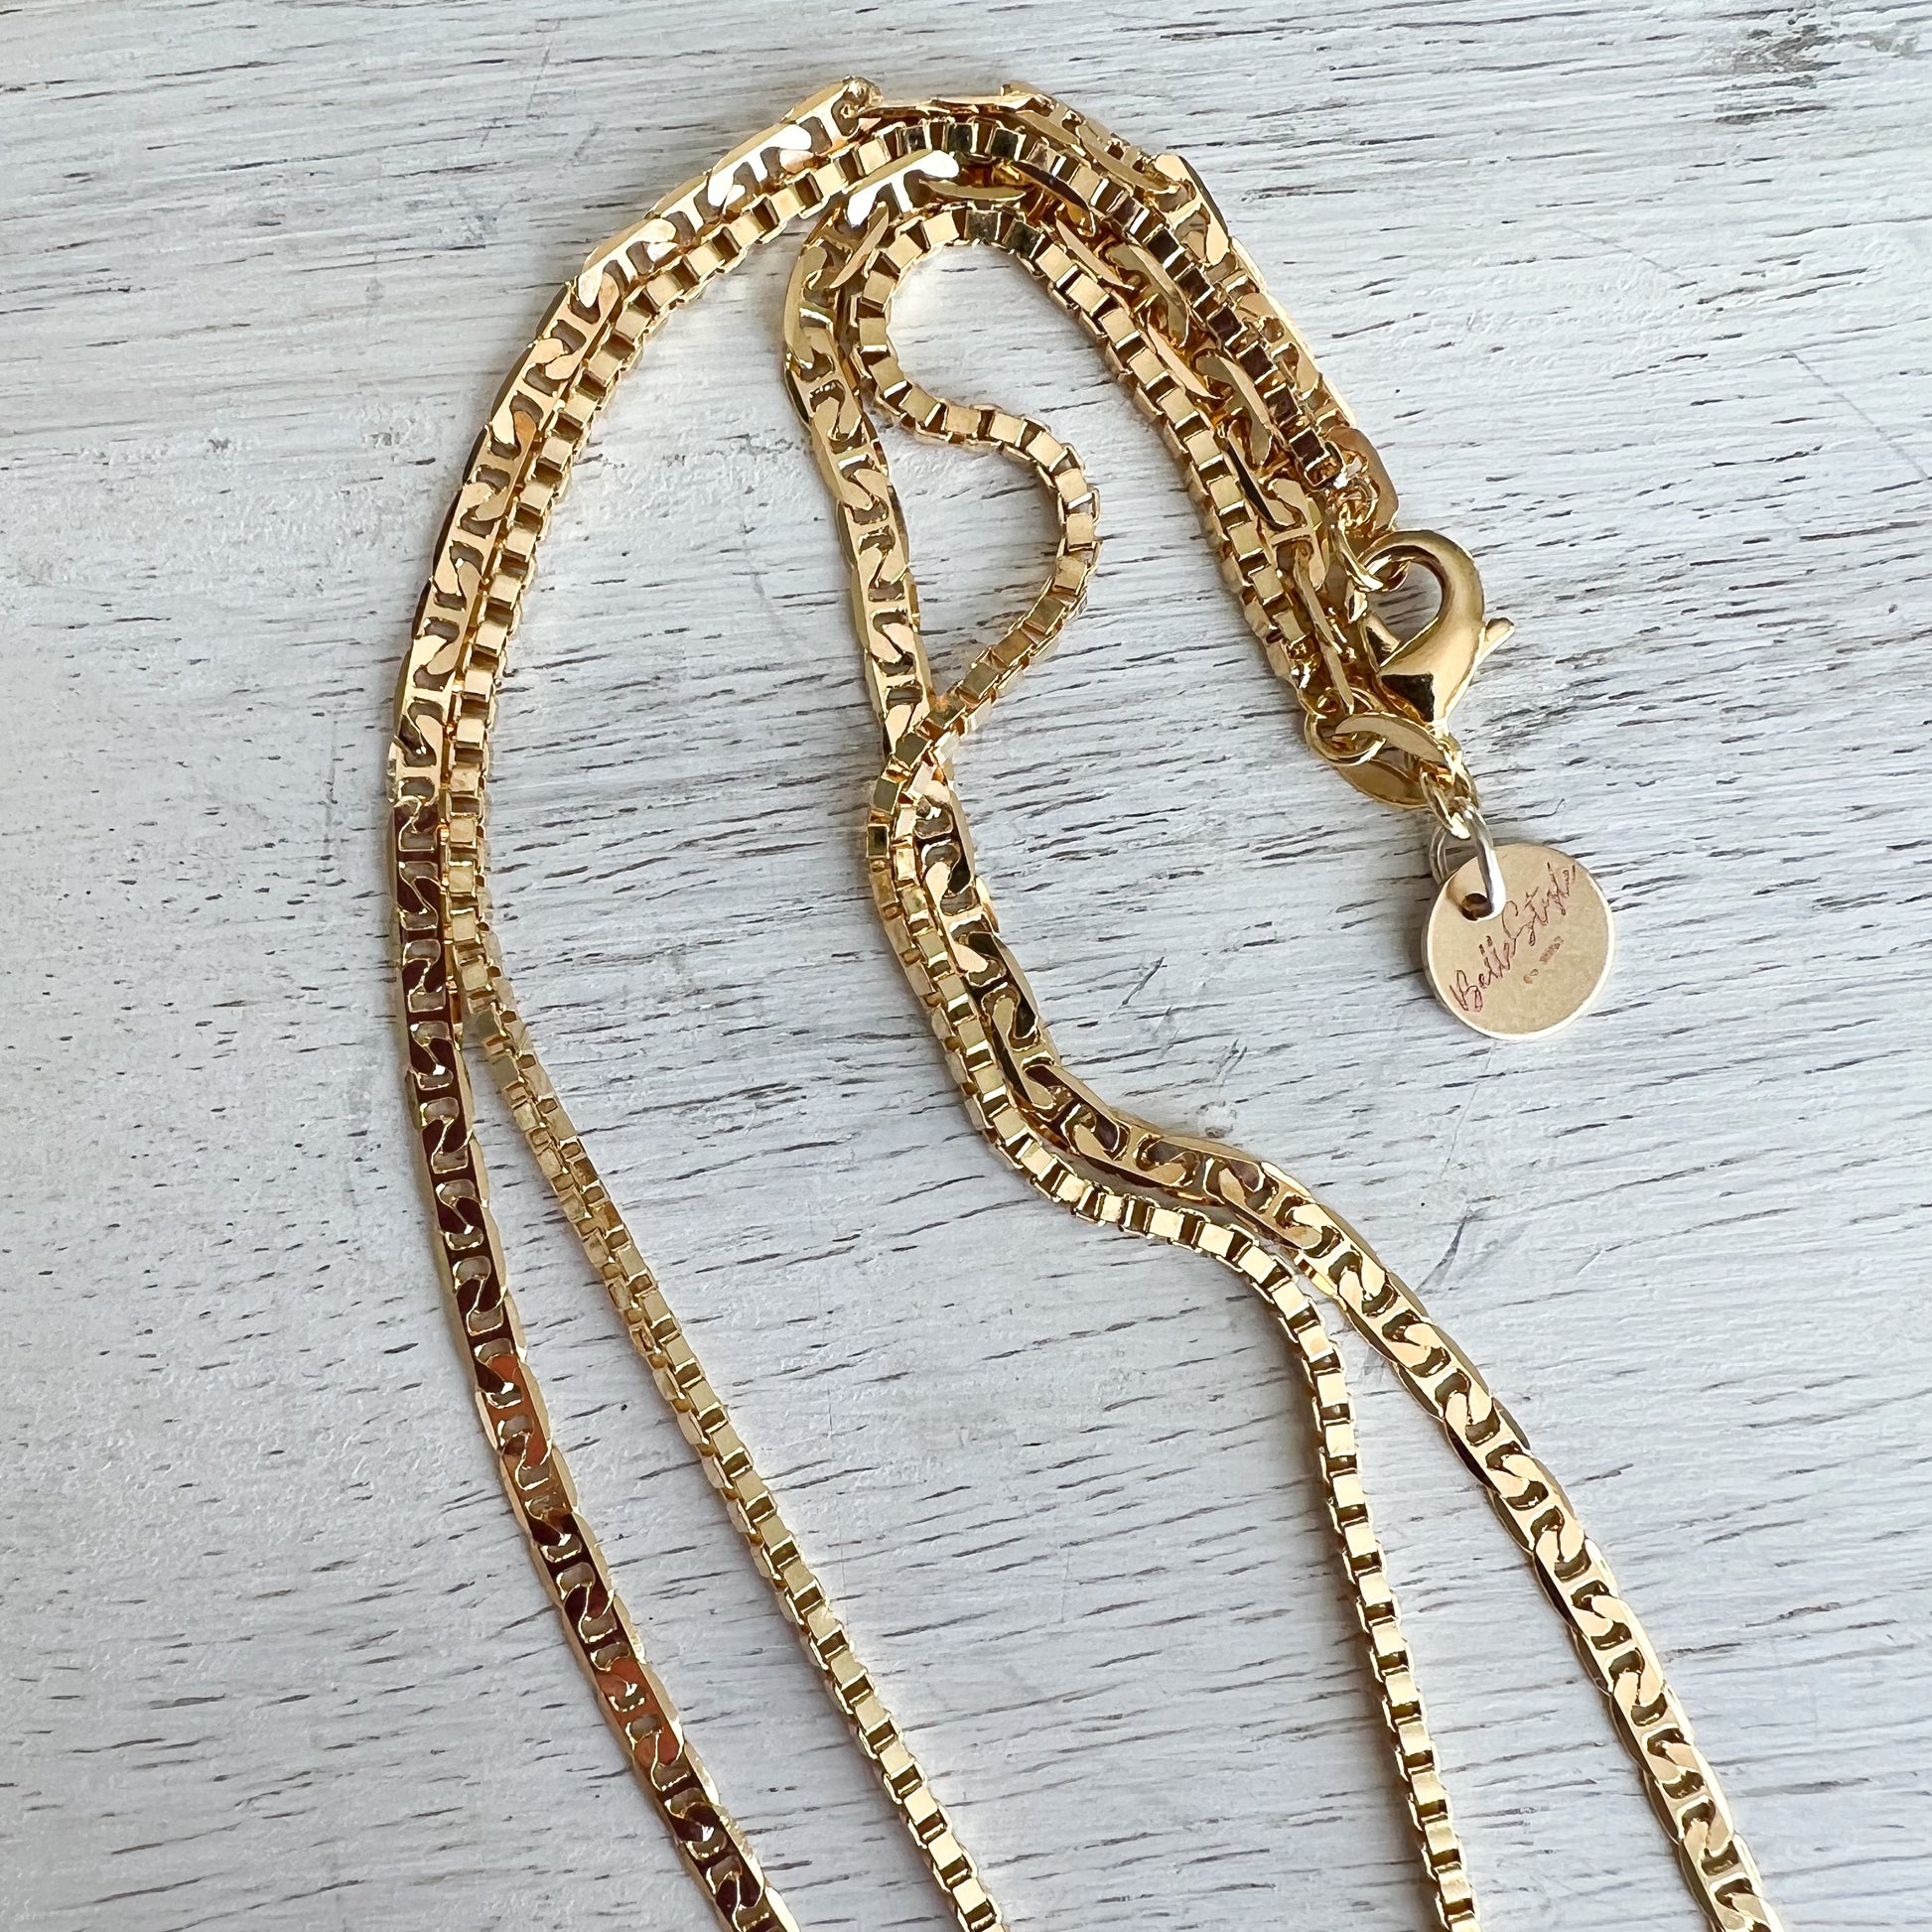 Flynn Park Double Chain Gold Necklace - BelleStyle